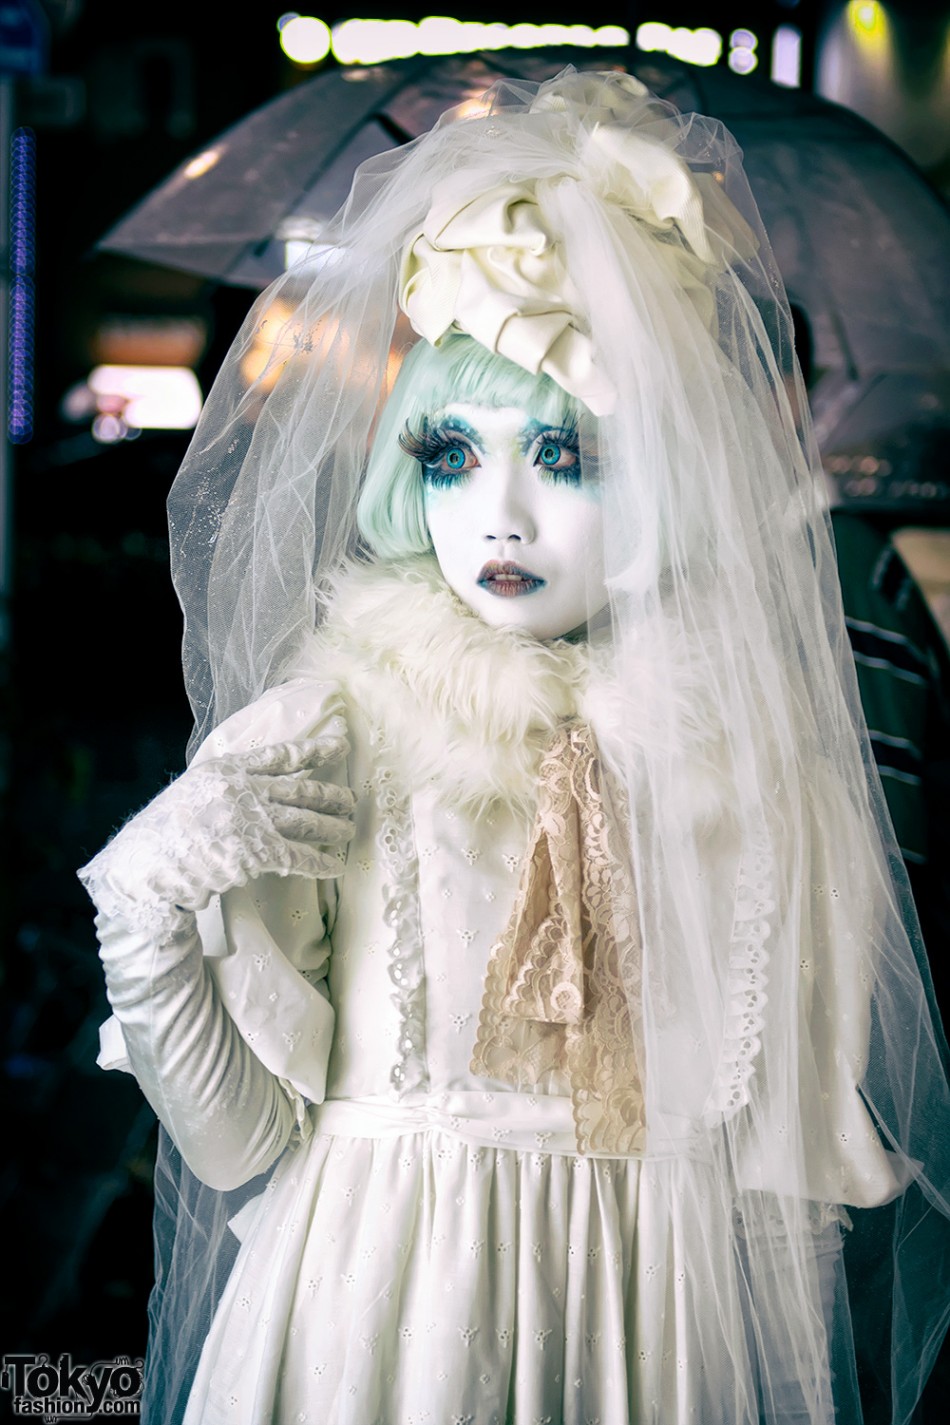 Shironuri Artist Minori in Harajuku w/ Vintage Lace Dress & Veil ...